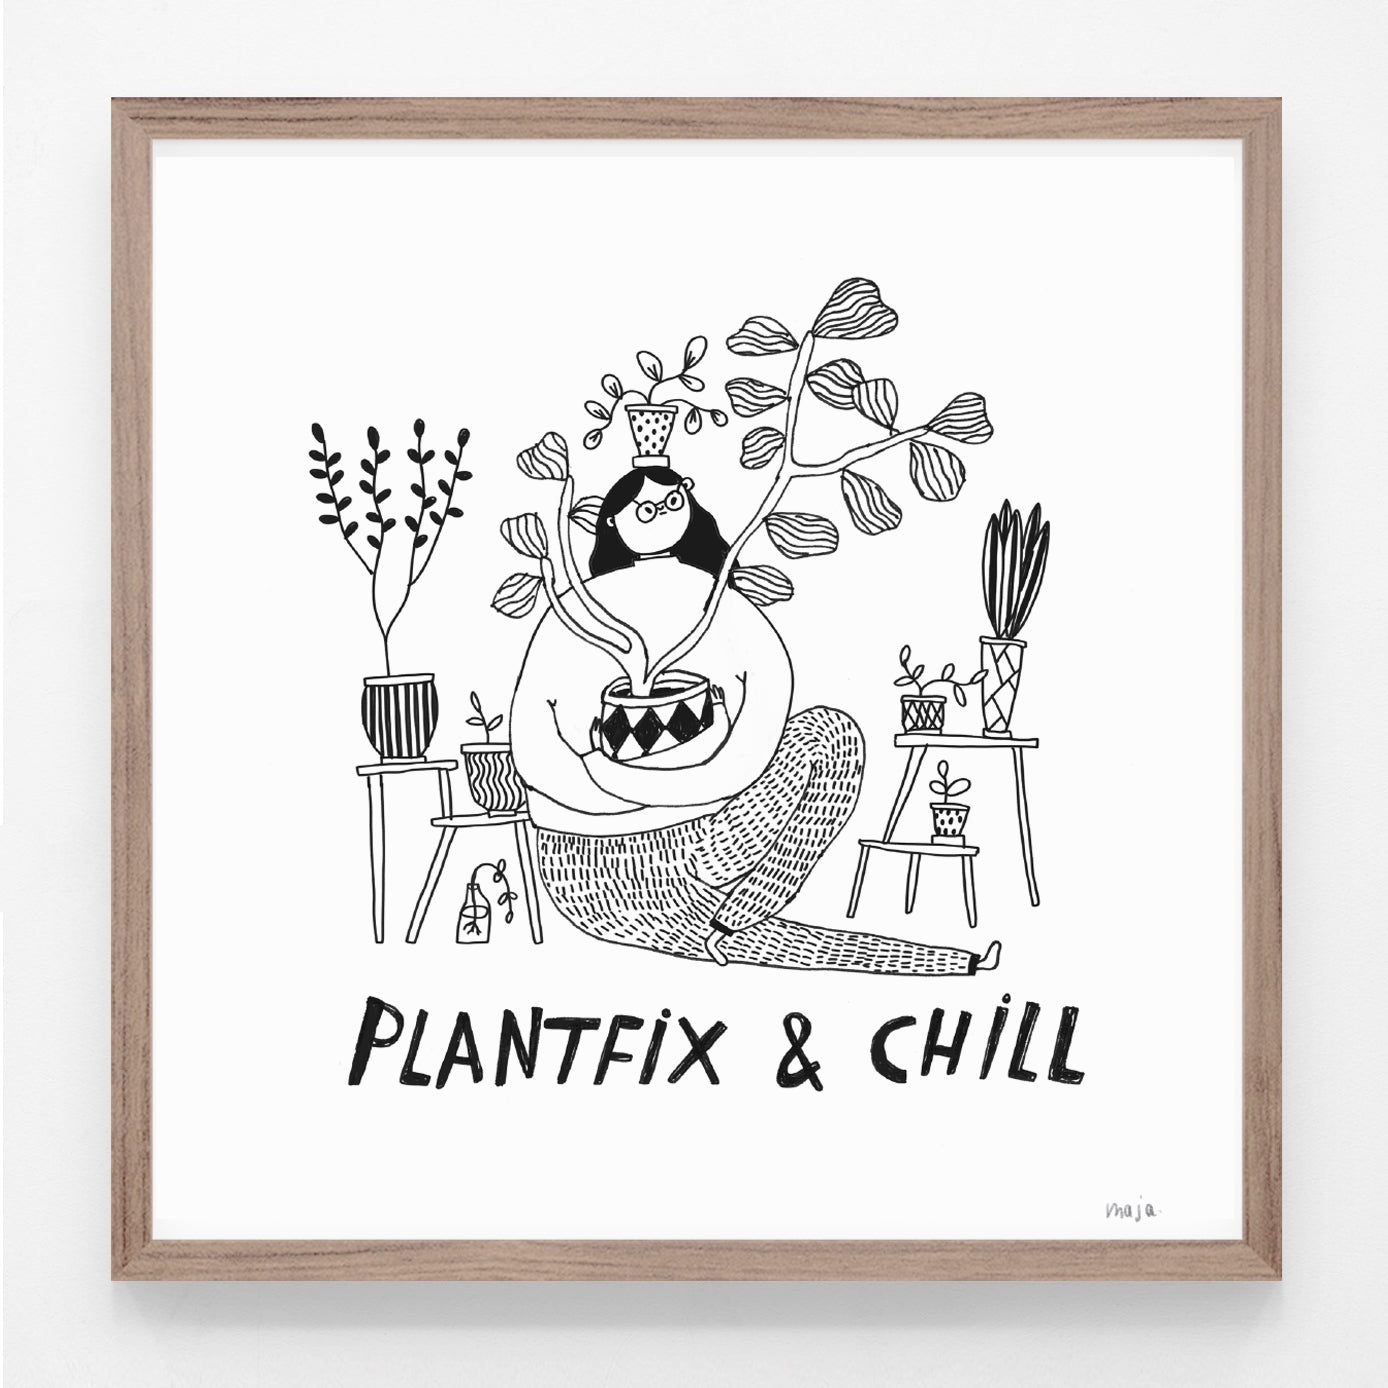 Plantfix & chill, print